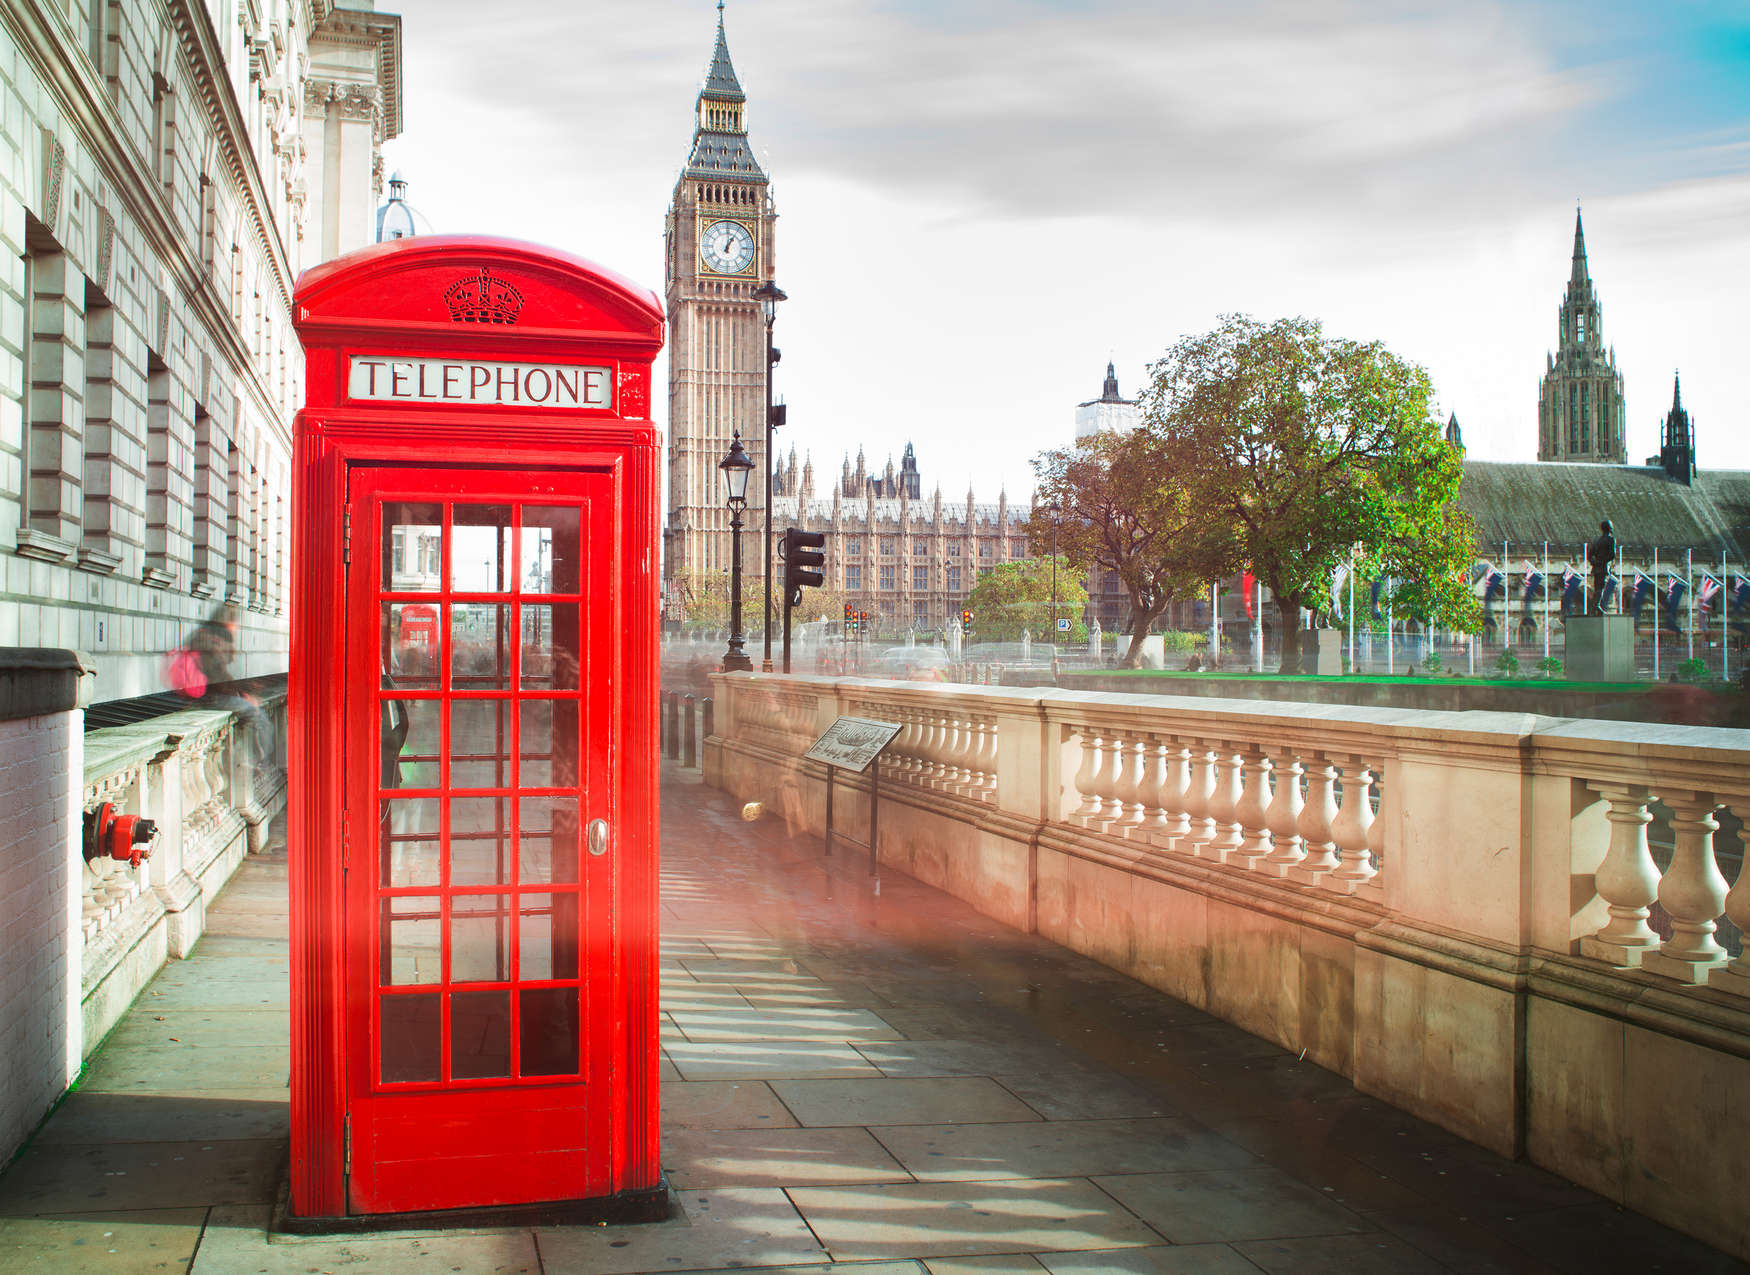             Cabina telefonica rossa a Londra - Rosso, marrone, verde
        